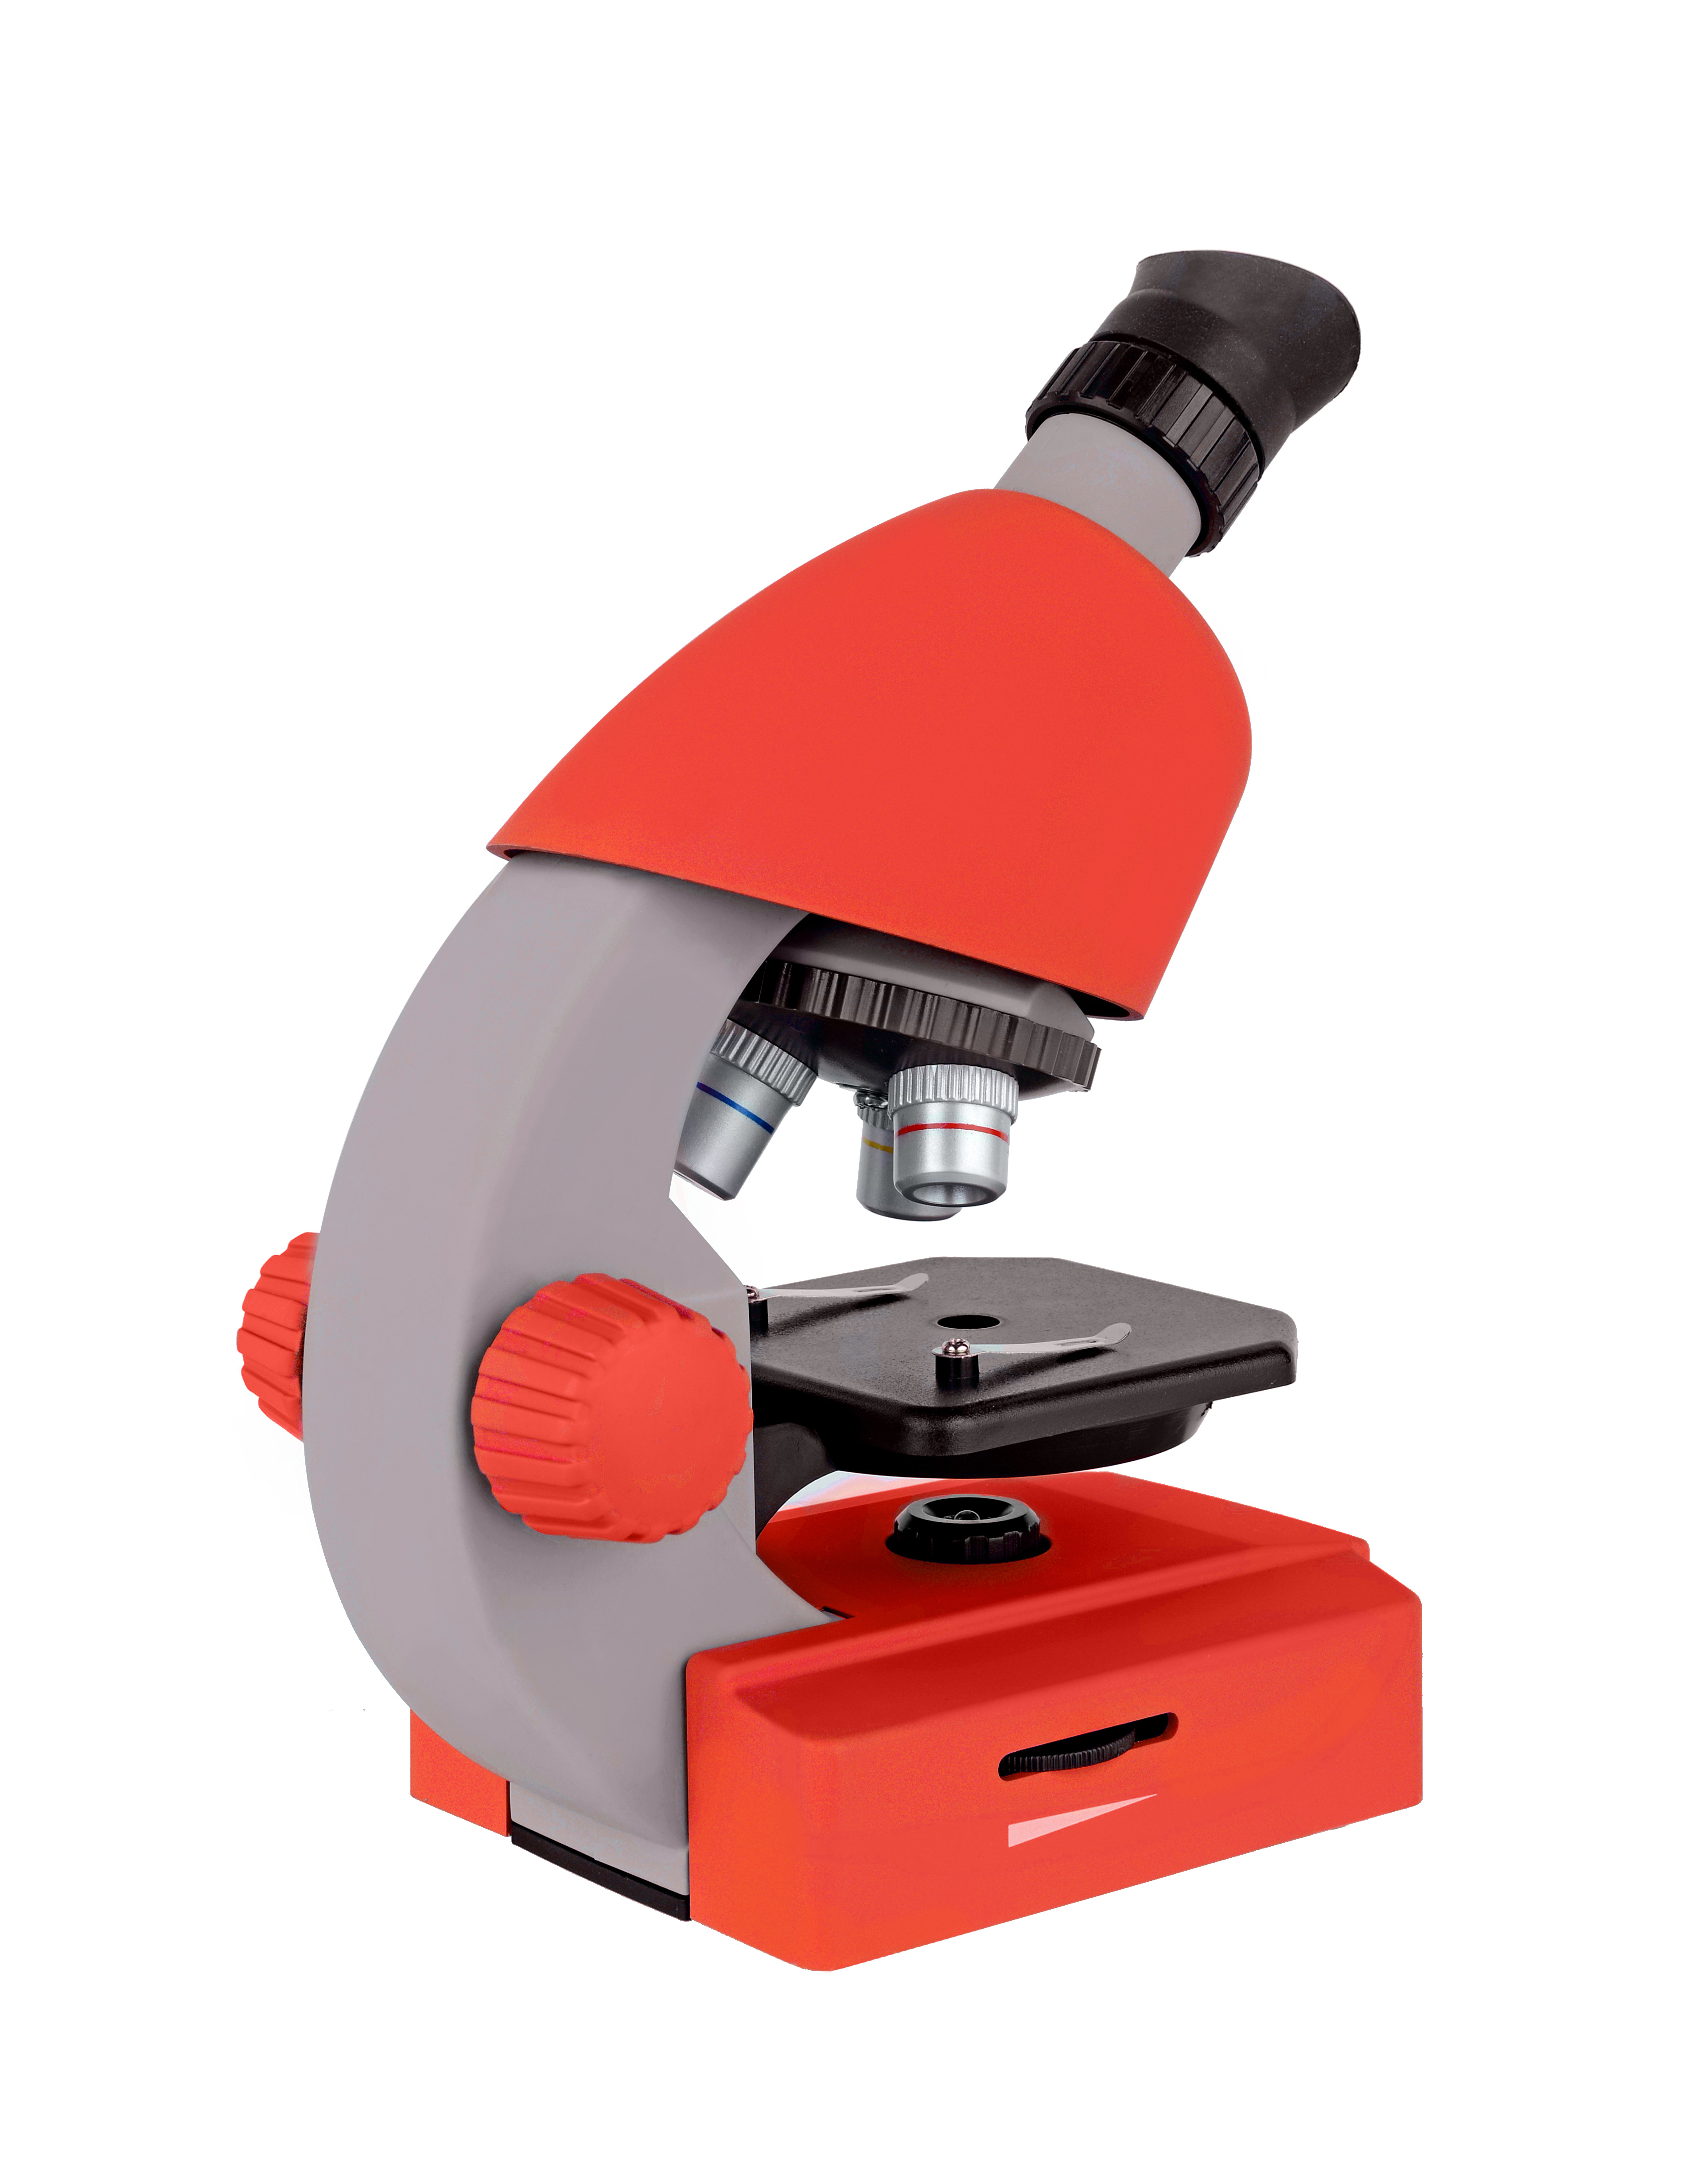 BRESSER JUNIOR 40x-640x Microscope